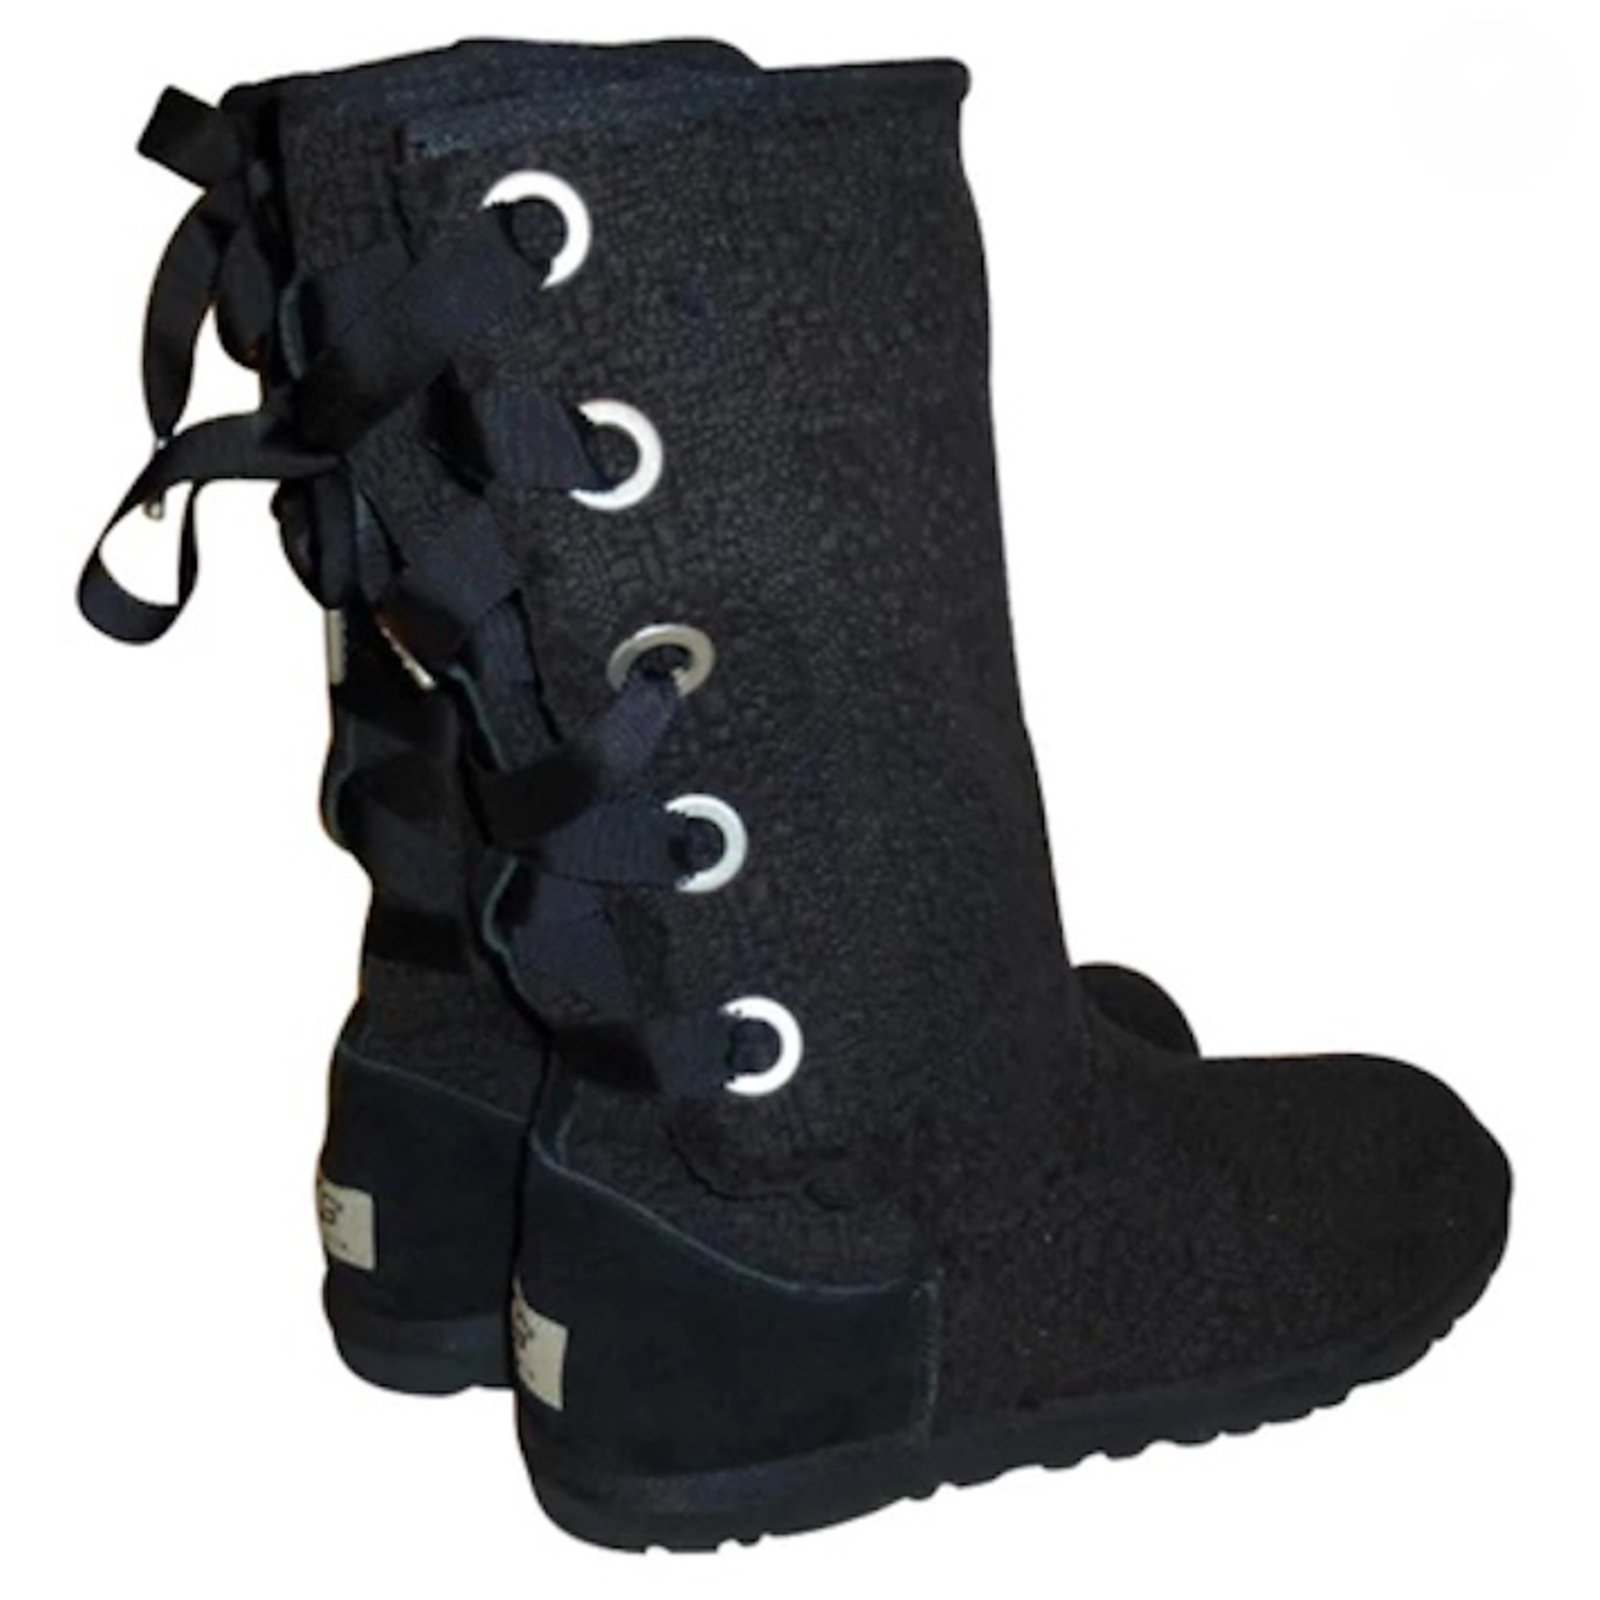 black rubber ugg boots